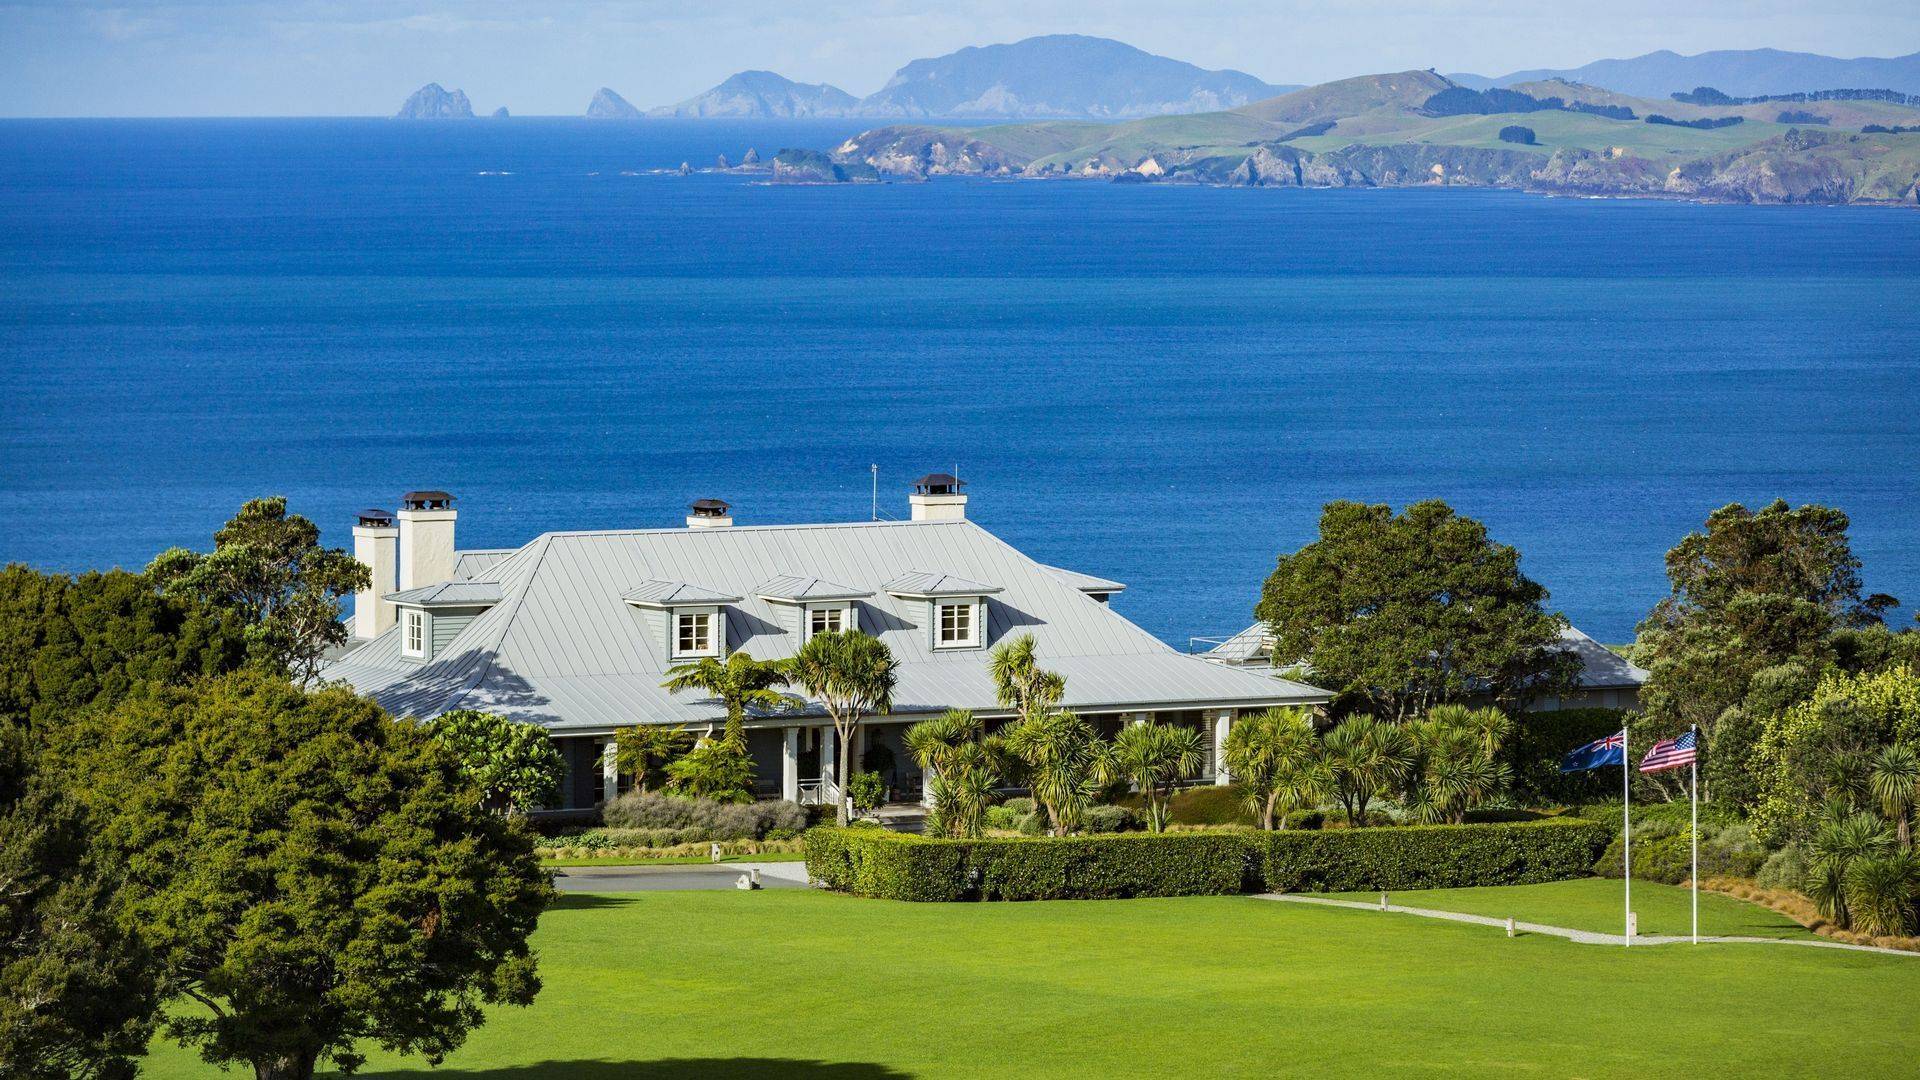 LuxeGetaways - Luxury Travel - Luxury Travel Magazine - Luxe Getaways - Luxury Lifestyle - Luxury Villa Rentals - Robertson Lodges - New Zealand